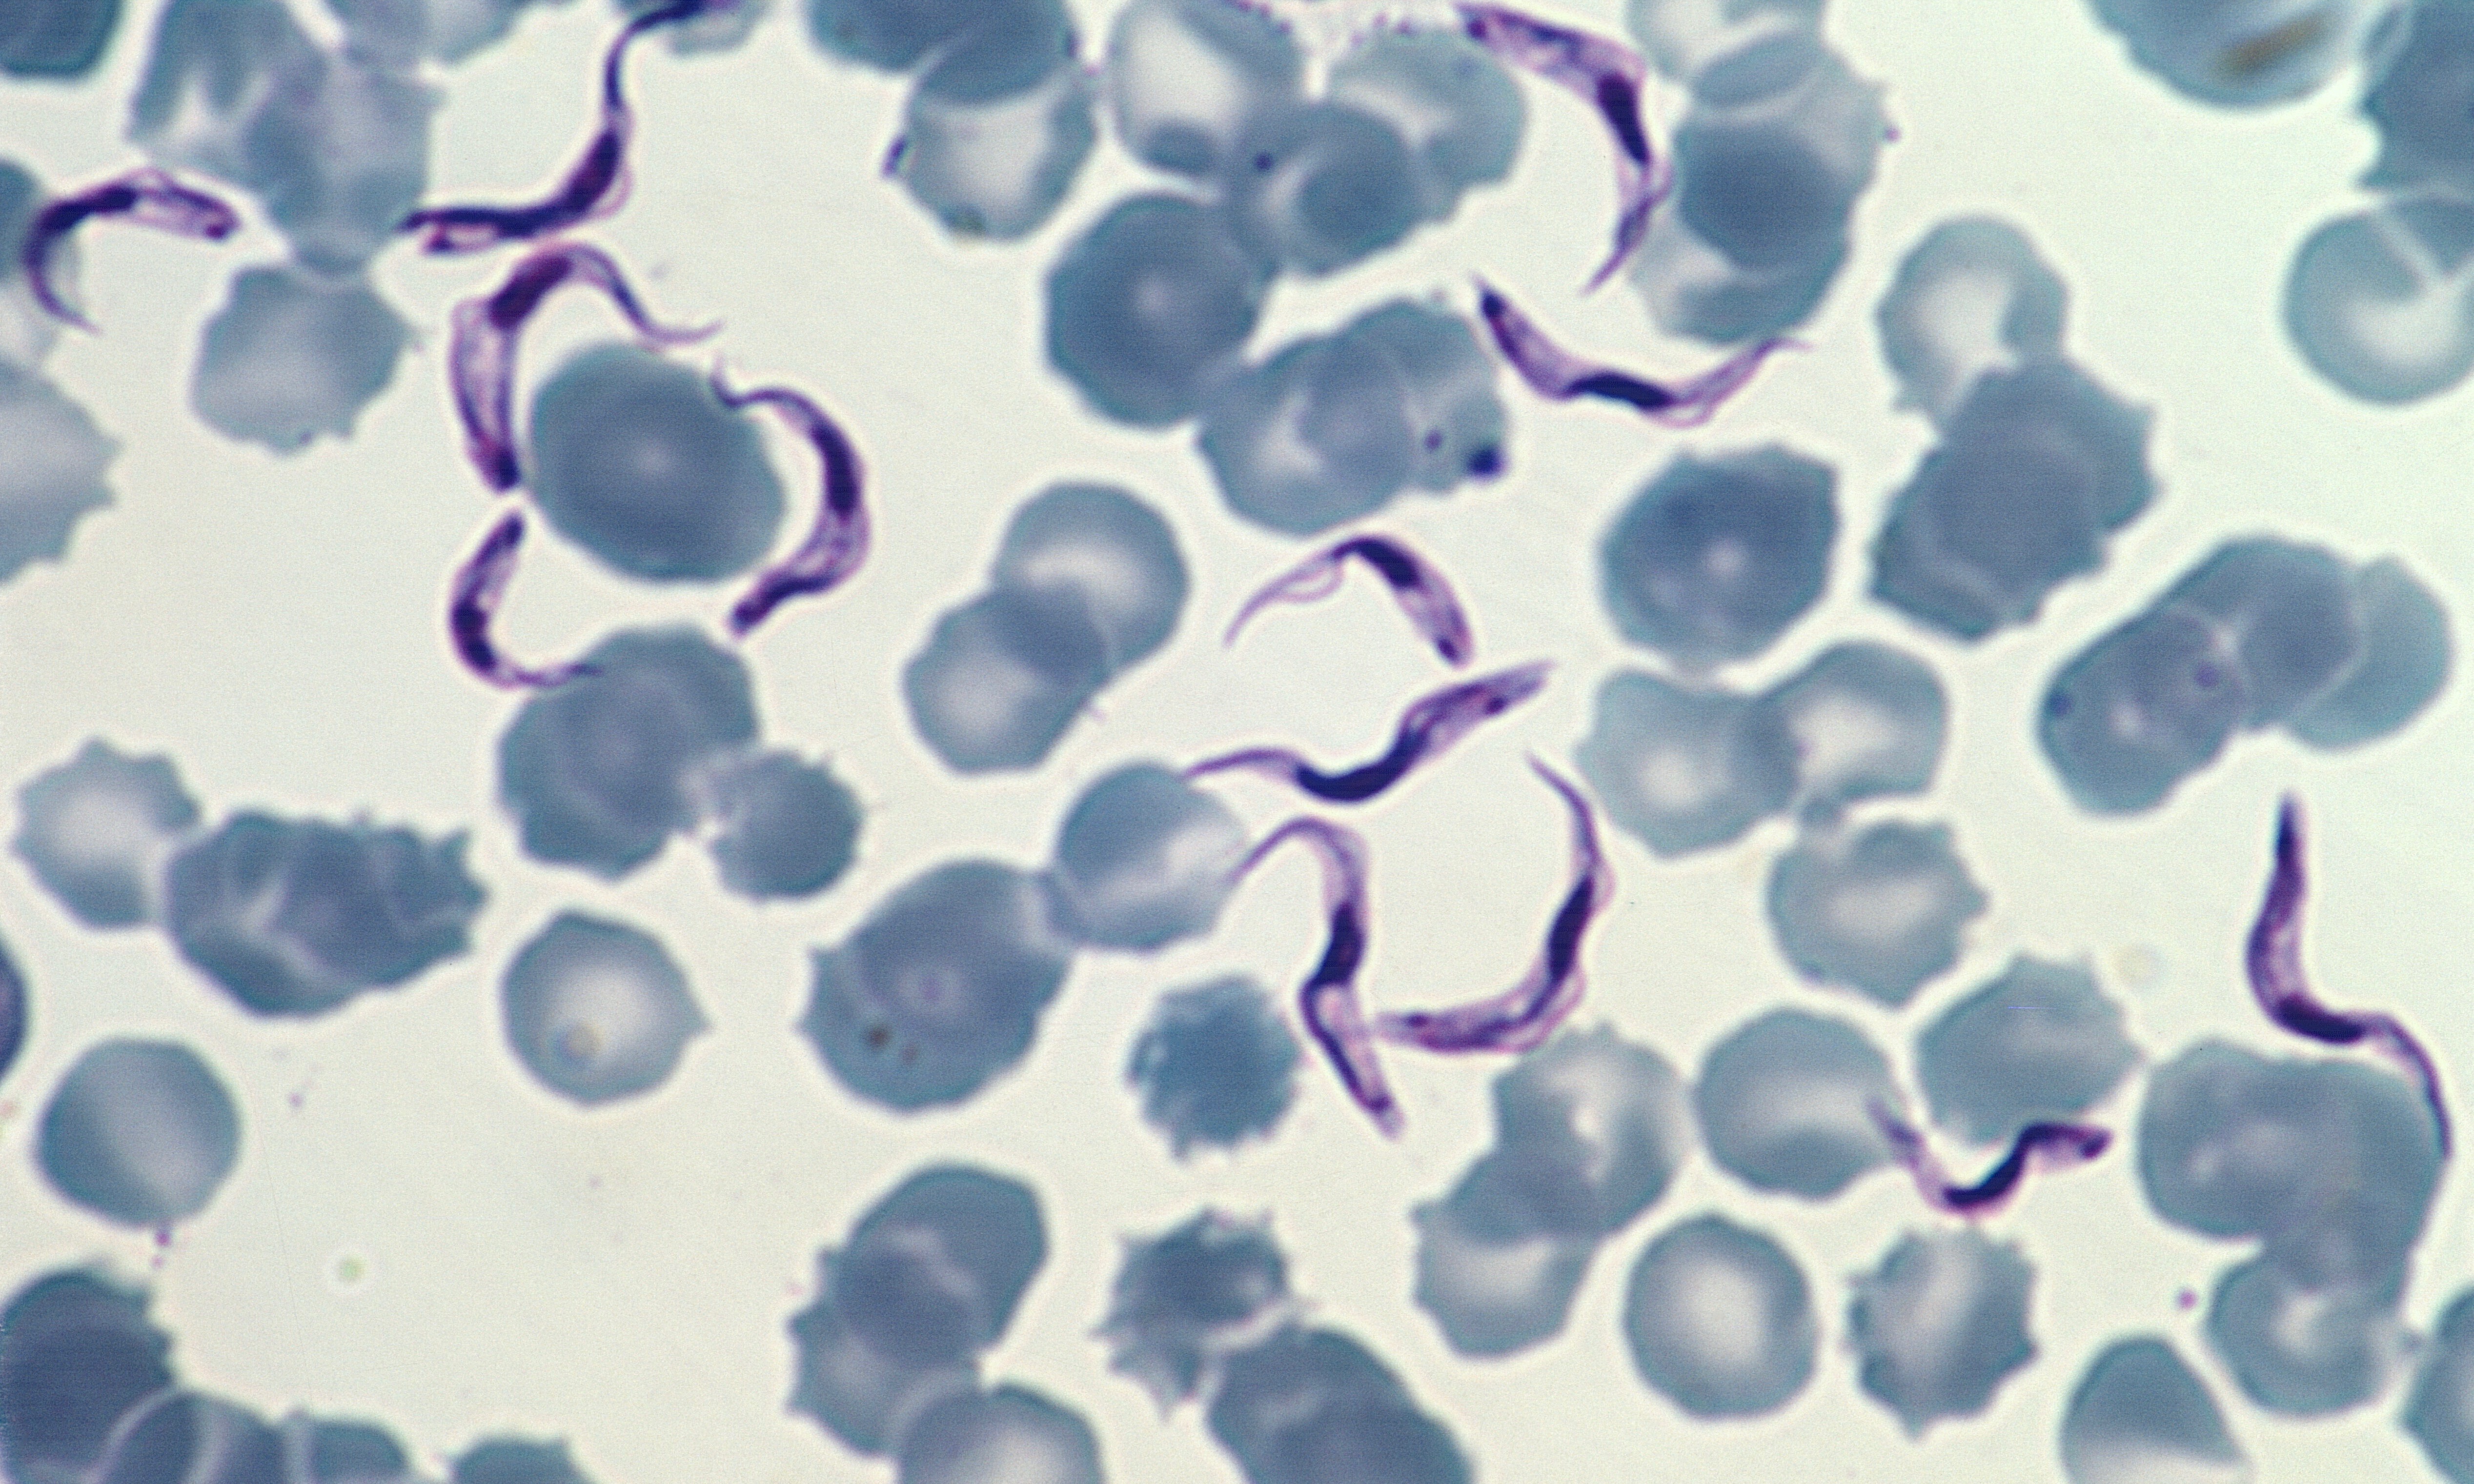 Trypanosomes 3 (Canine 3)